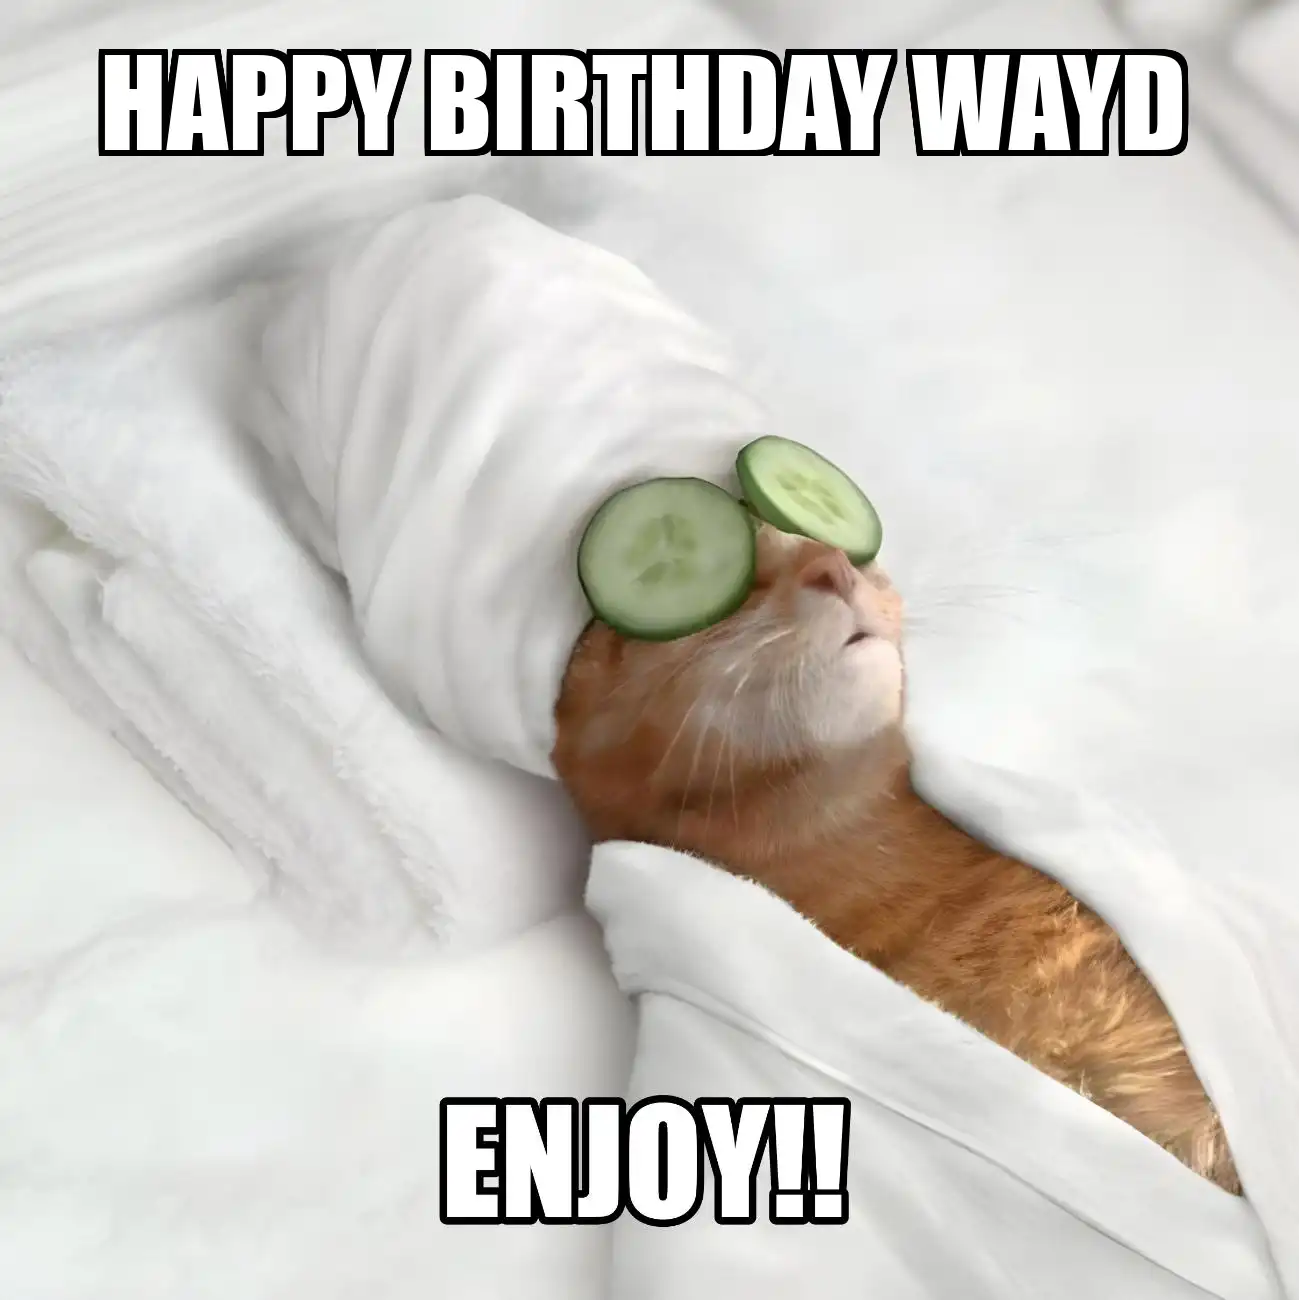 Happy Birthday Wayd Enjoy Cat Meme